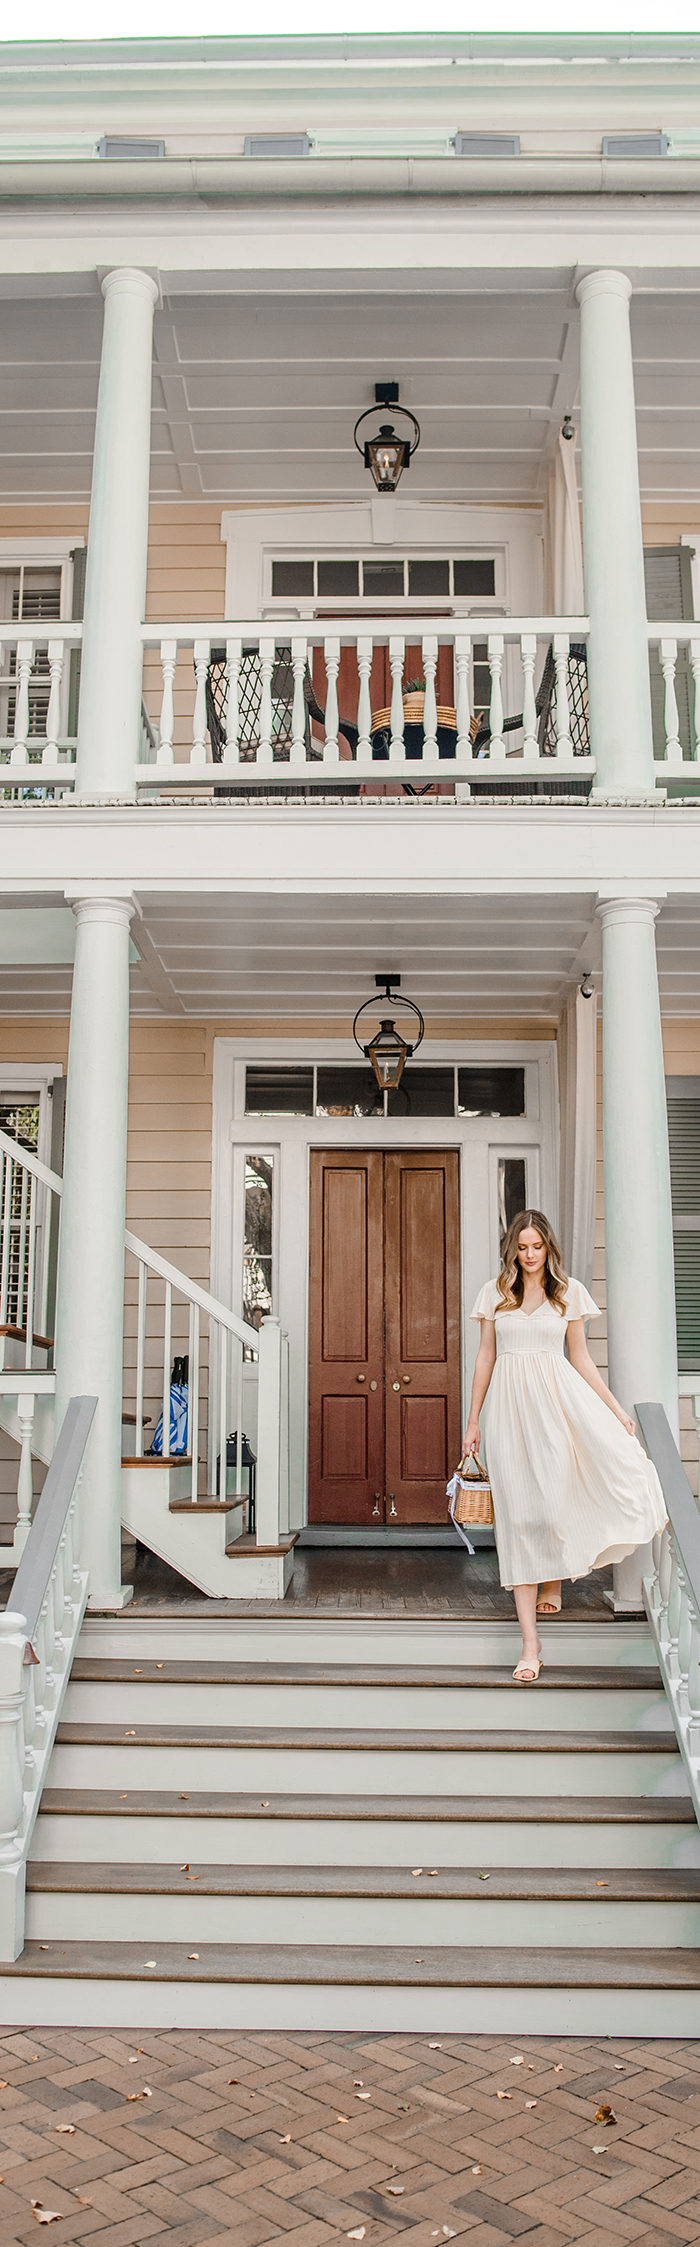 Alyssa Campanella of The A List blog visits Zero George in Charleston wearing Christy Dawn Monarch dress